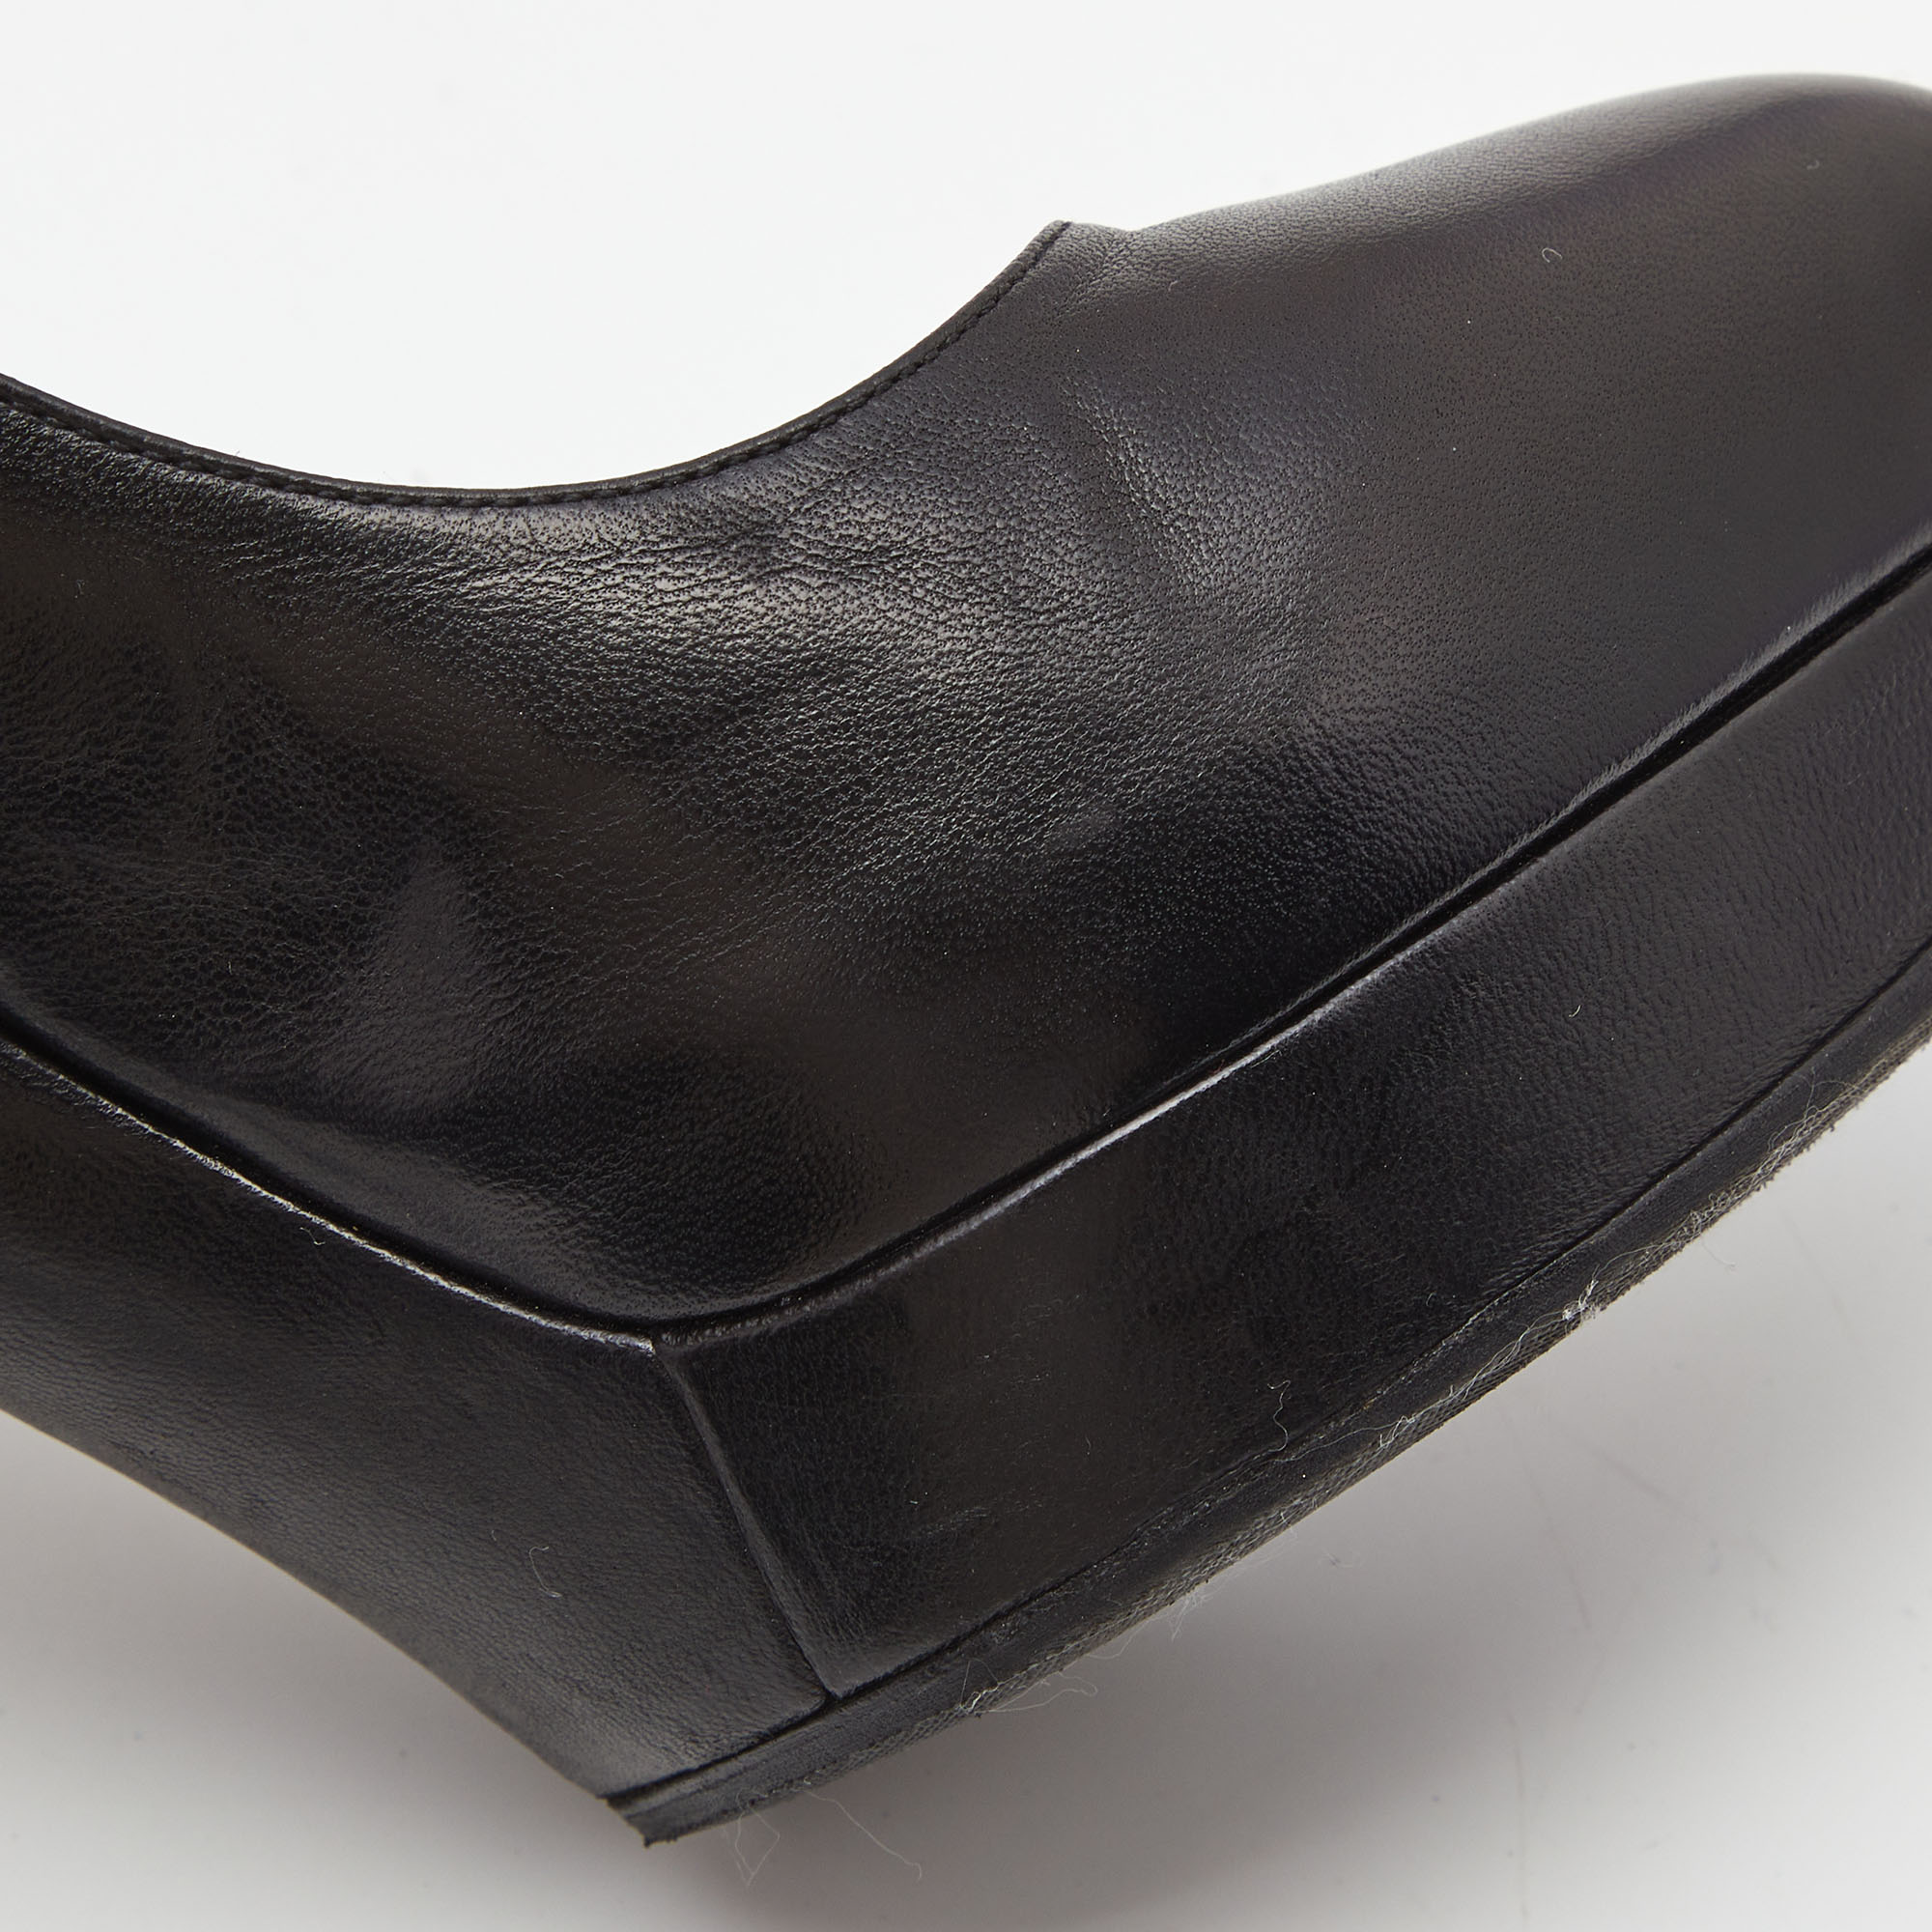 Yves Saint Laurent Black Leather Tribtoo Platform Pointed Toe Pumps Size 36